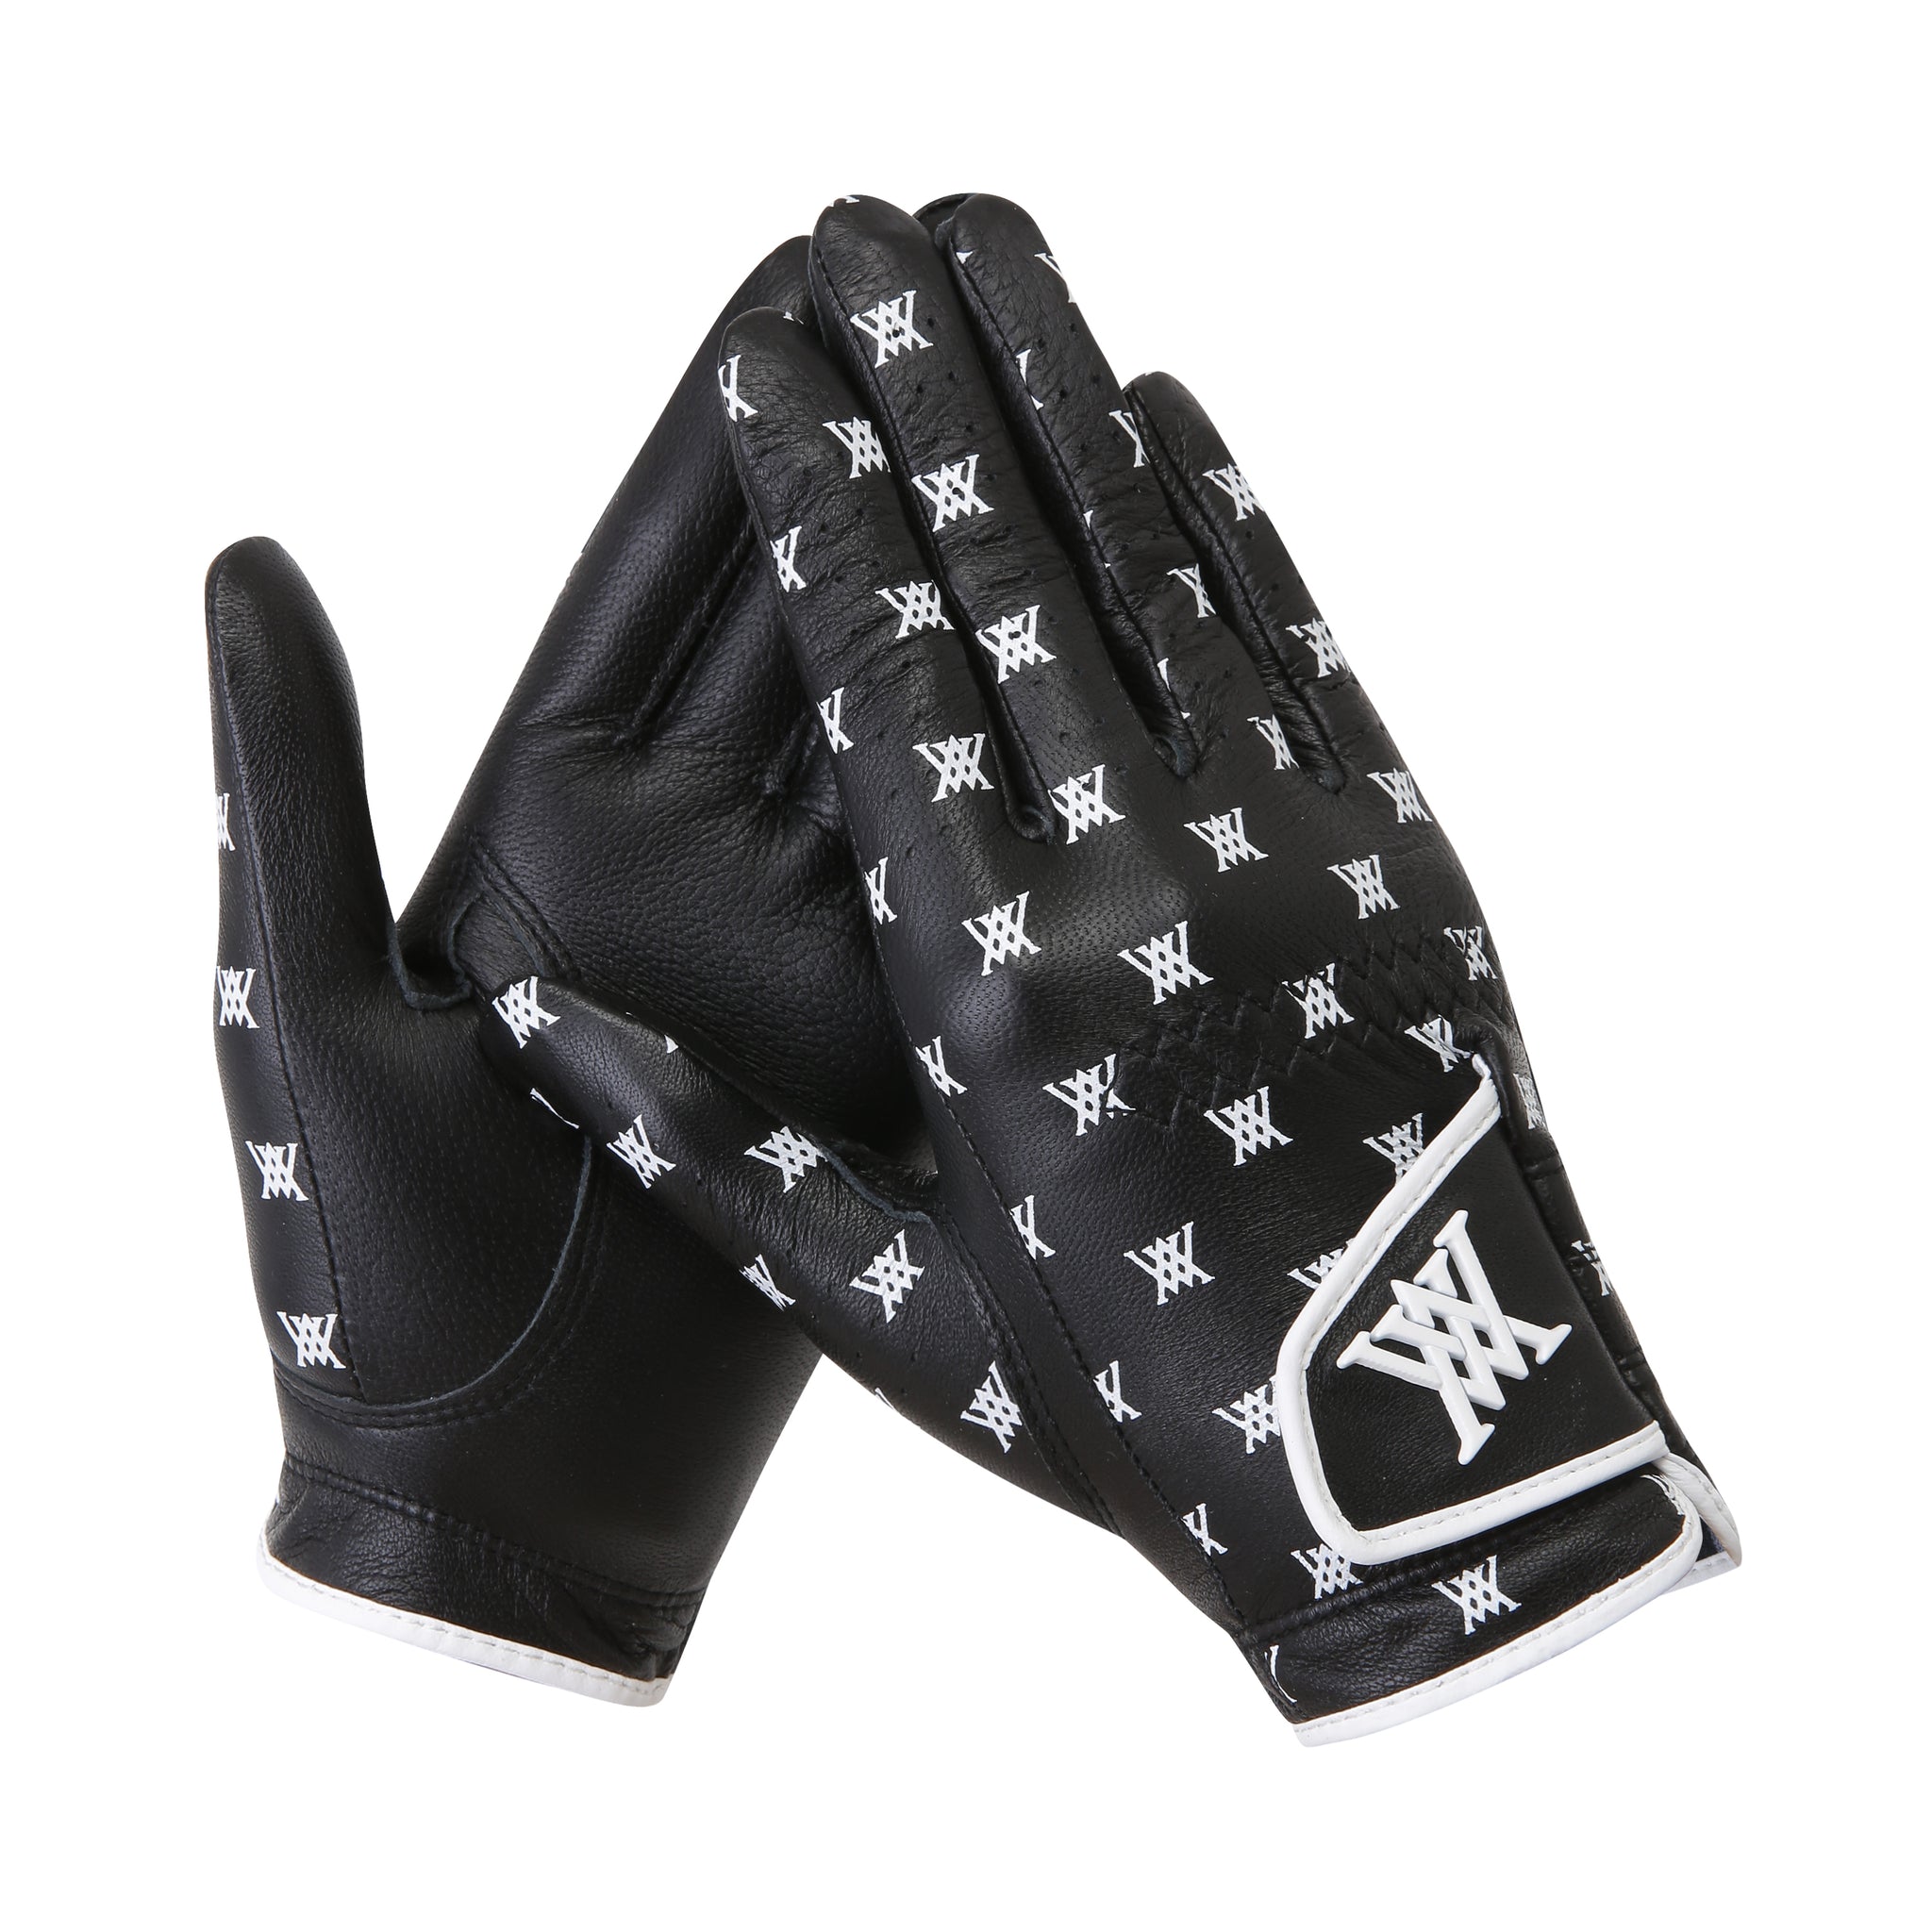 Women's Monogram Double-Hand Golf Gloves